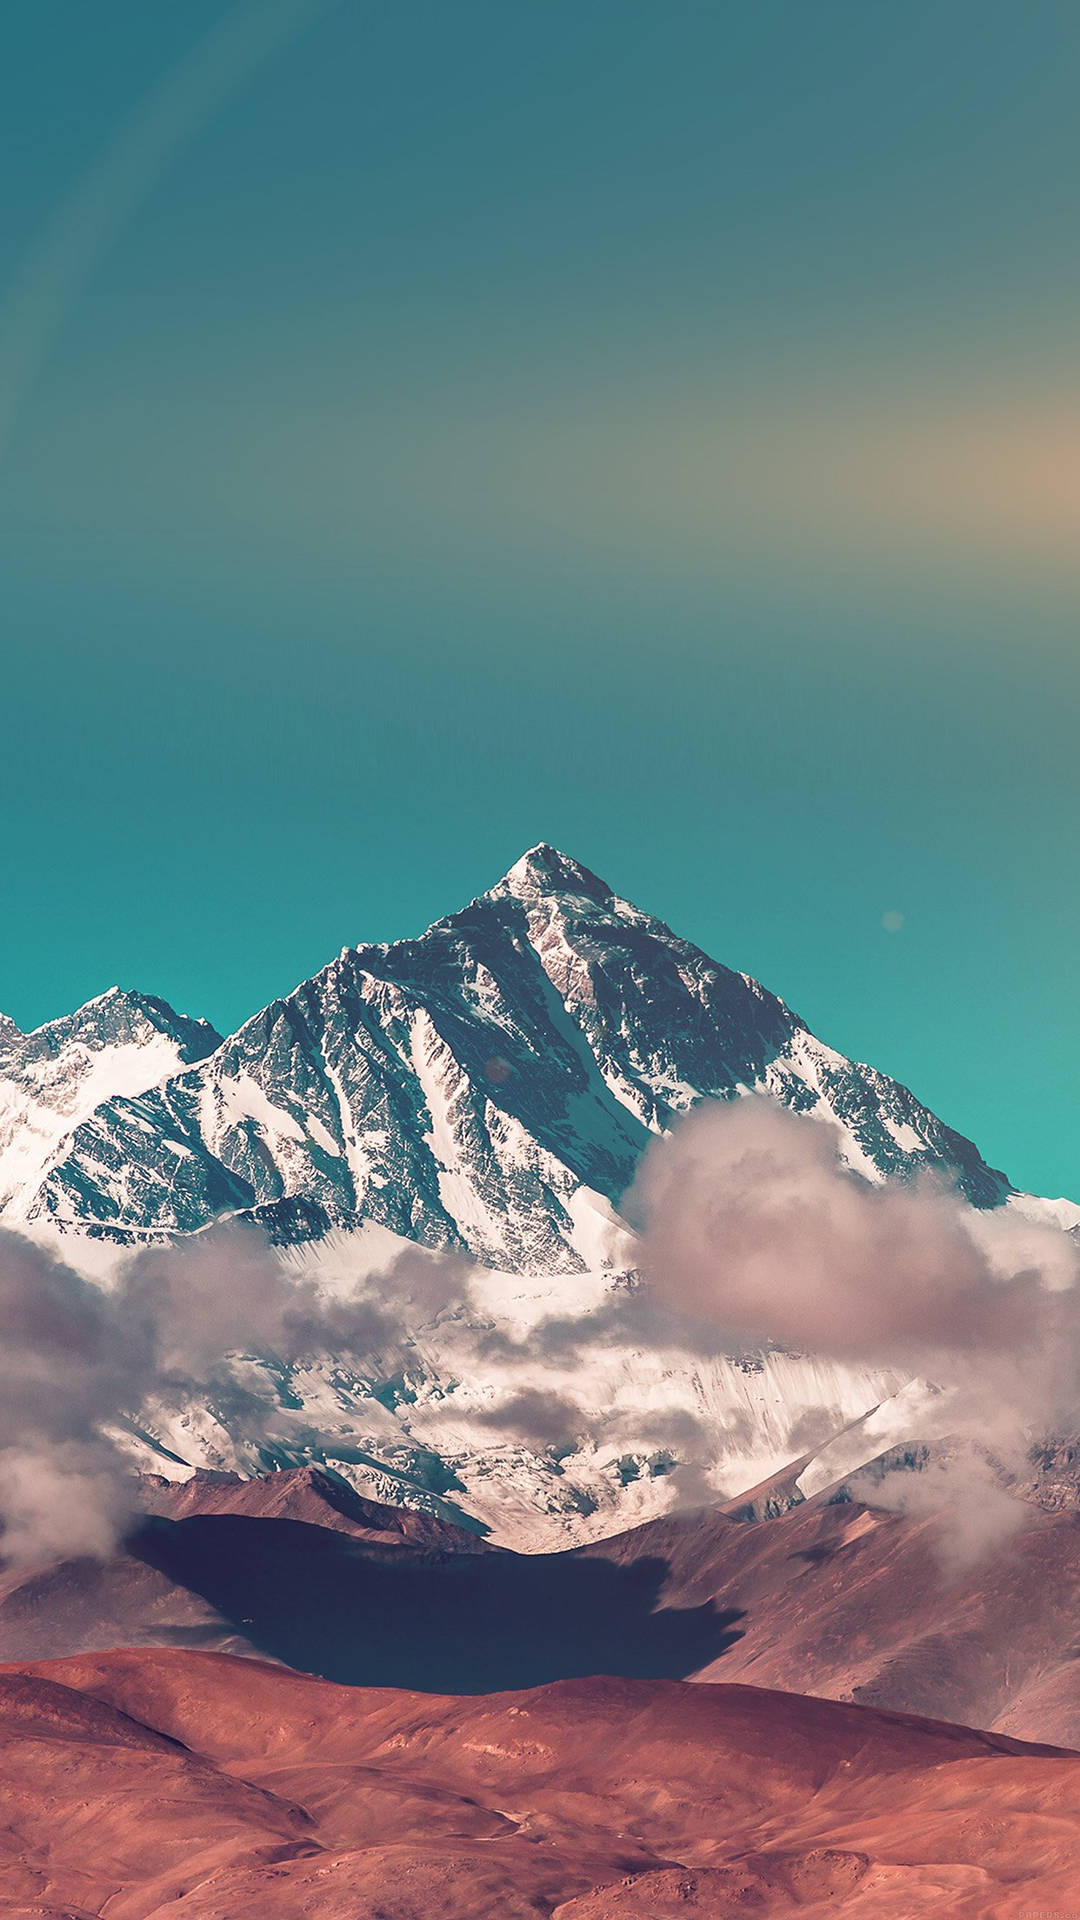 Mount Everest Peak Smartphone Background Wallpaper